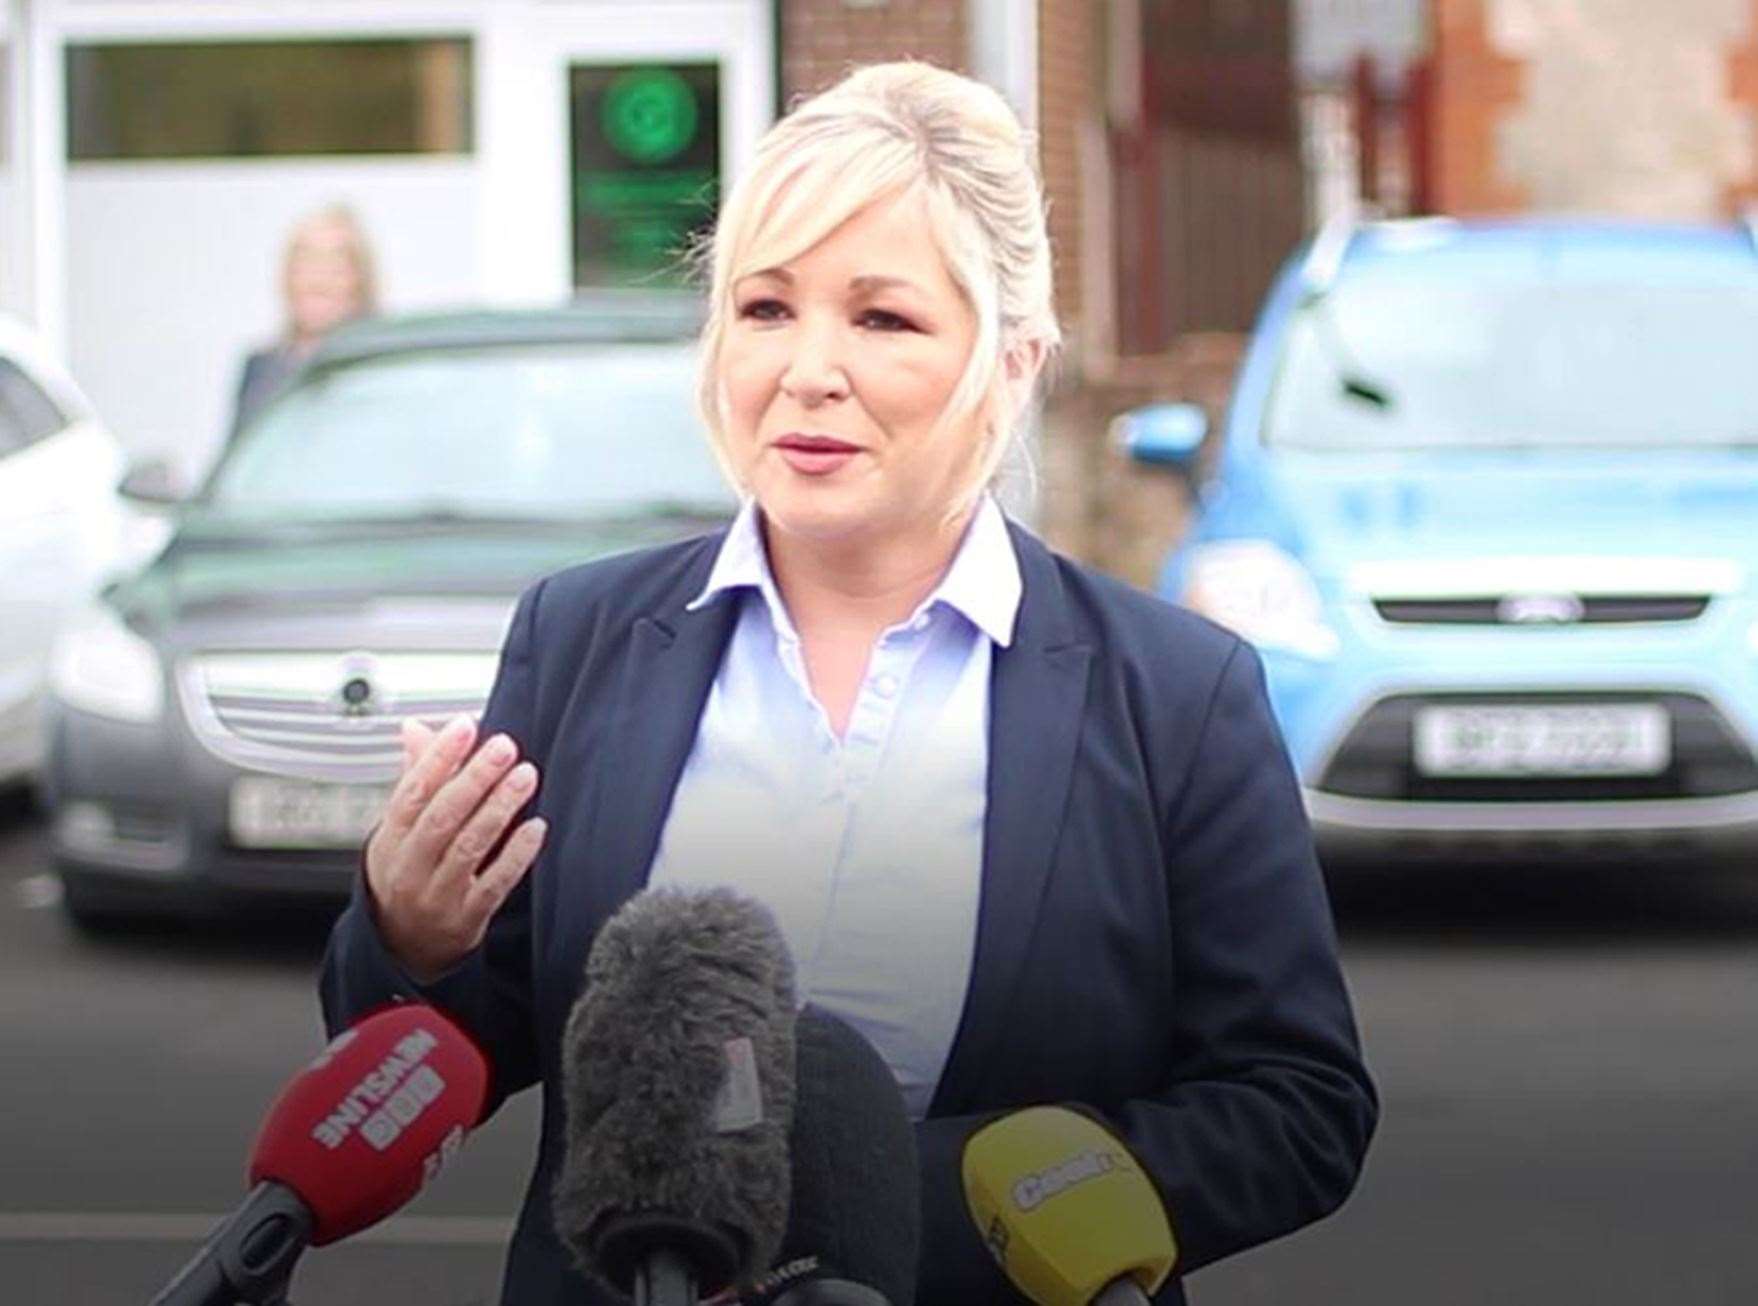 Sinn Fein’s vice president Michelle O’Neill spoke about the death of David Trimble during a visit to Cookstown (Sinn Fein/PA)